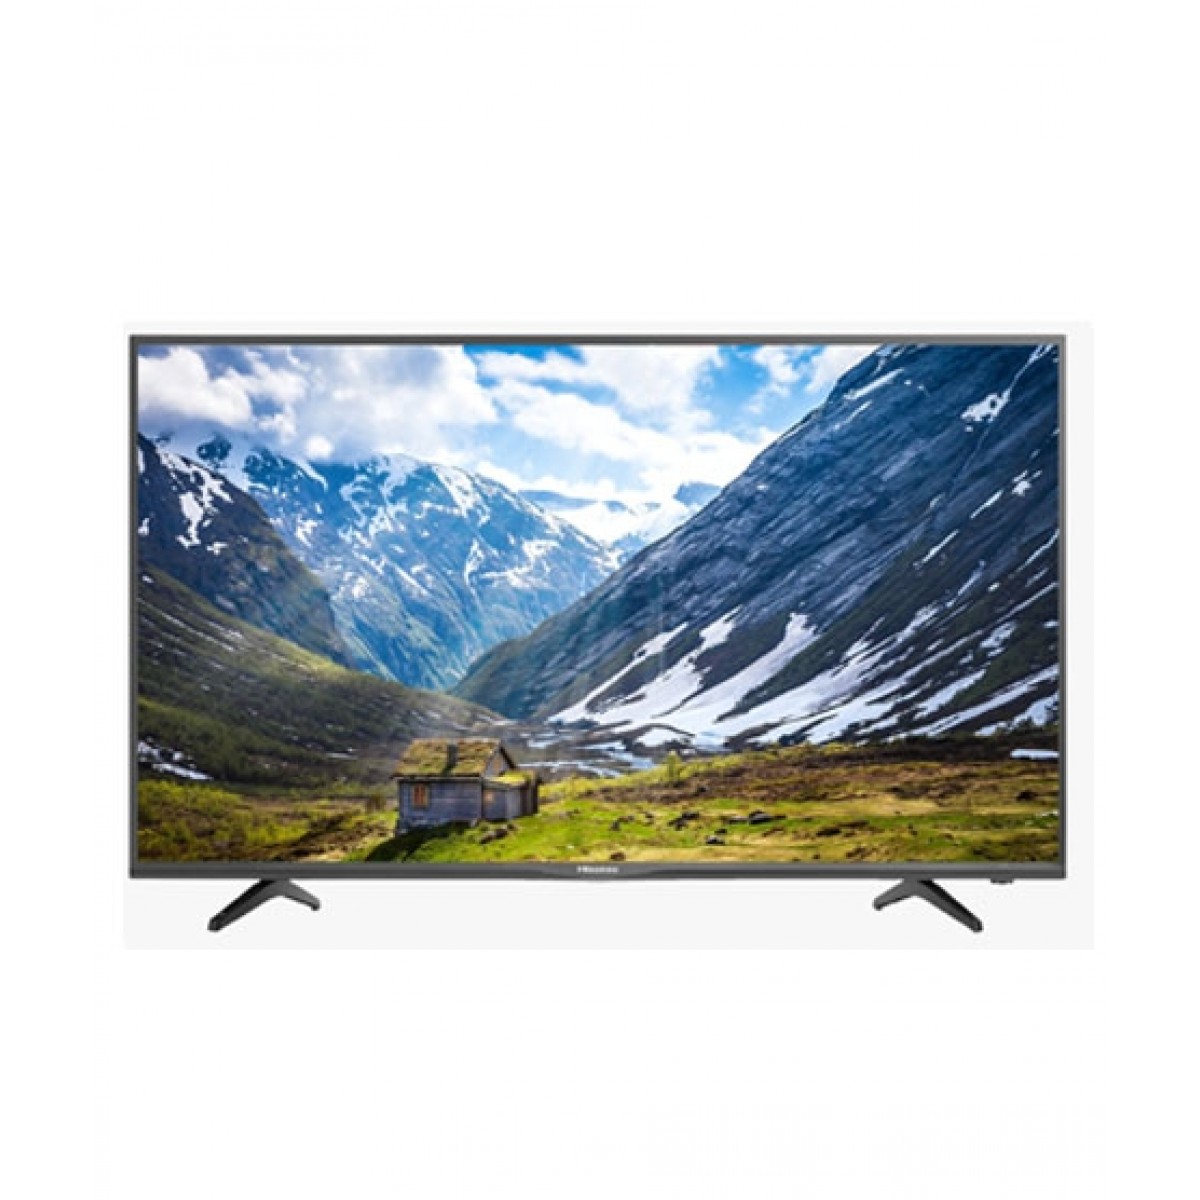 Hisense 49 Inch Full HD Smart LED TV - Gadget Central